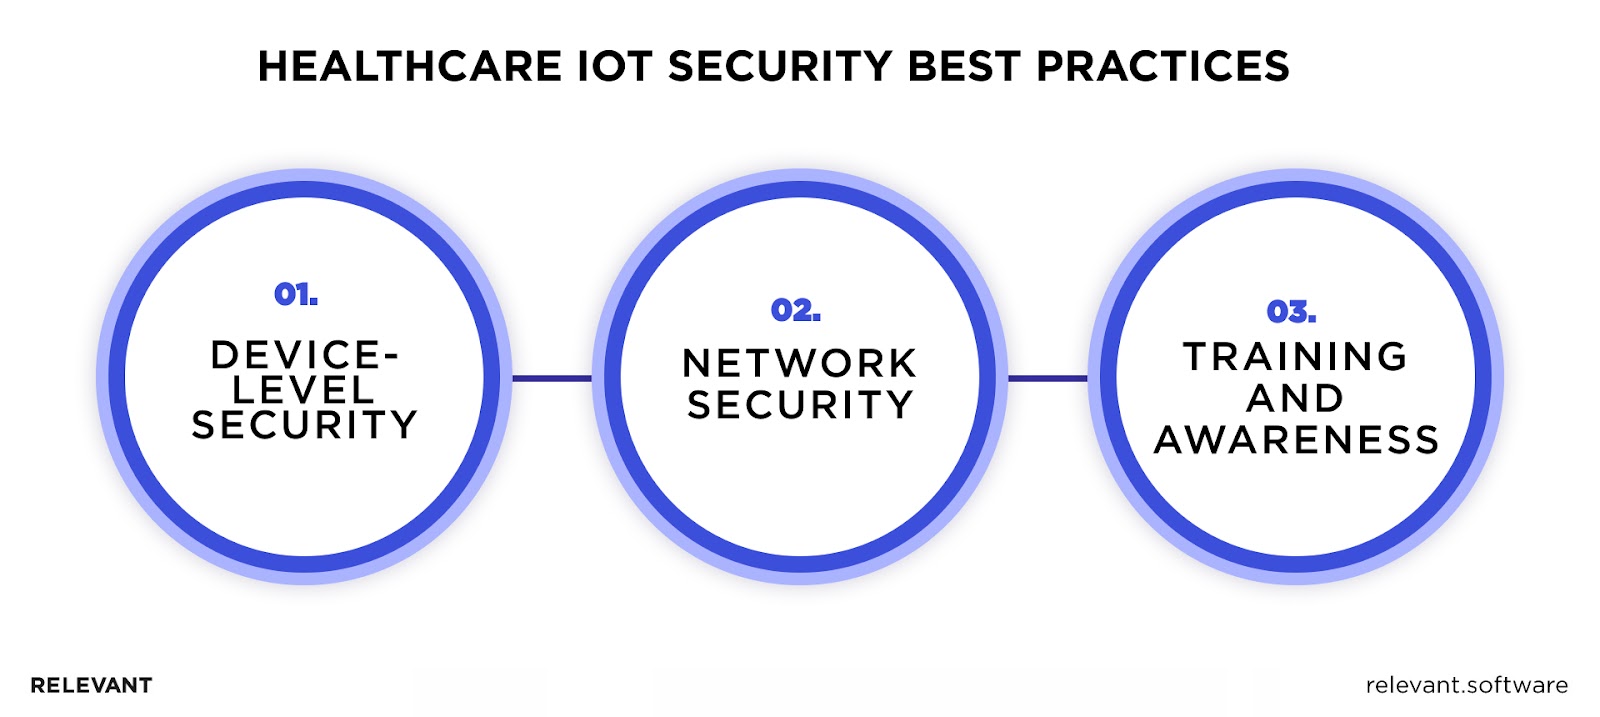 Healthcare IoT Security Best Practices